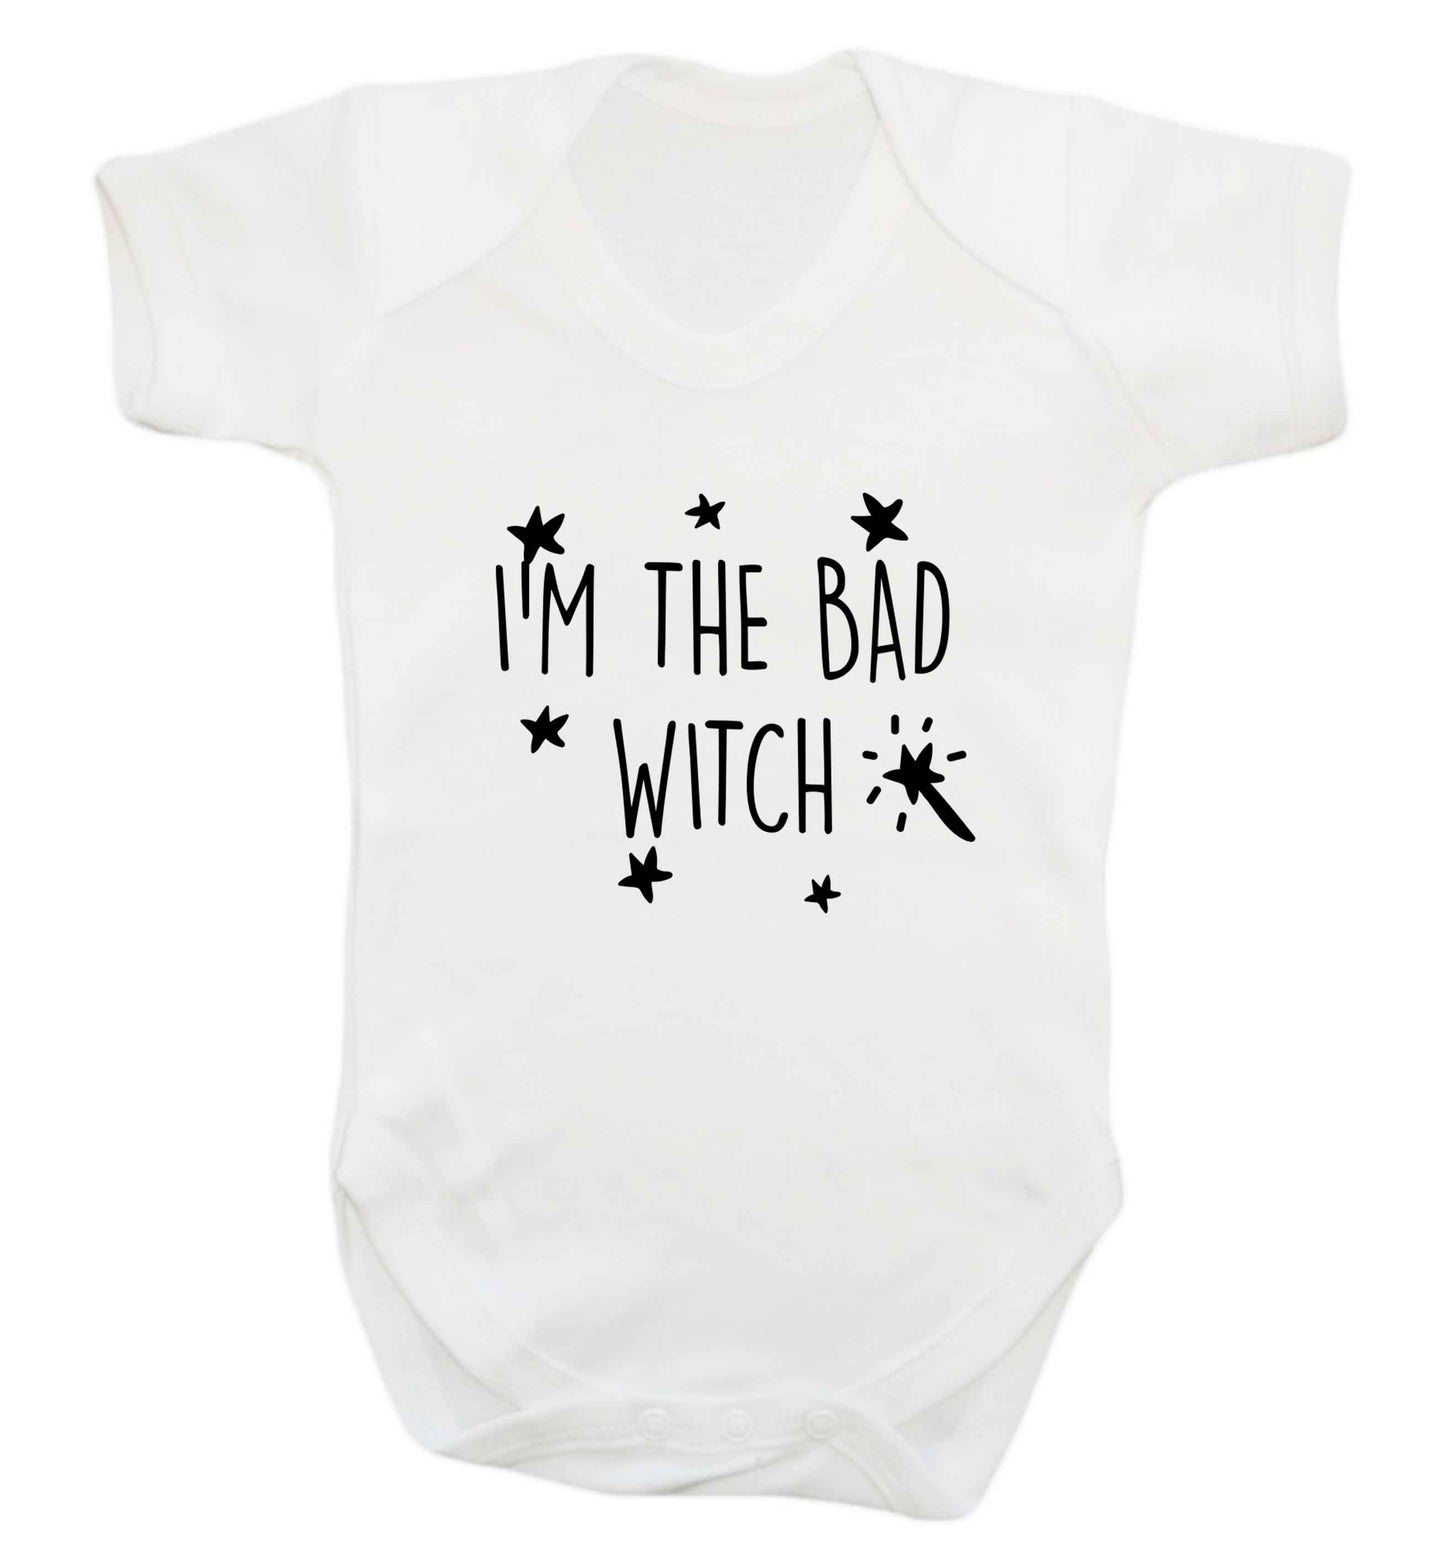 Bad witch baby vest white 18-24 months